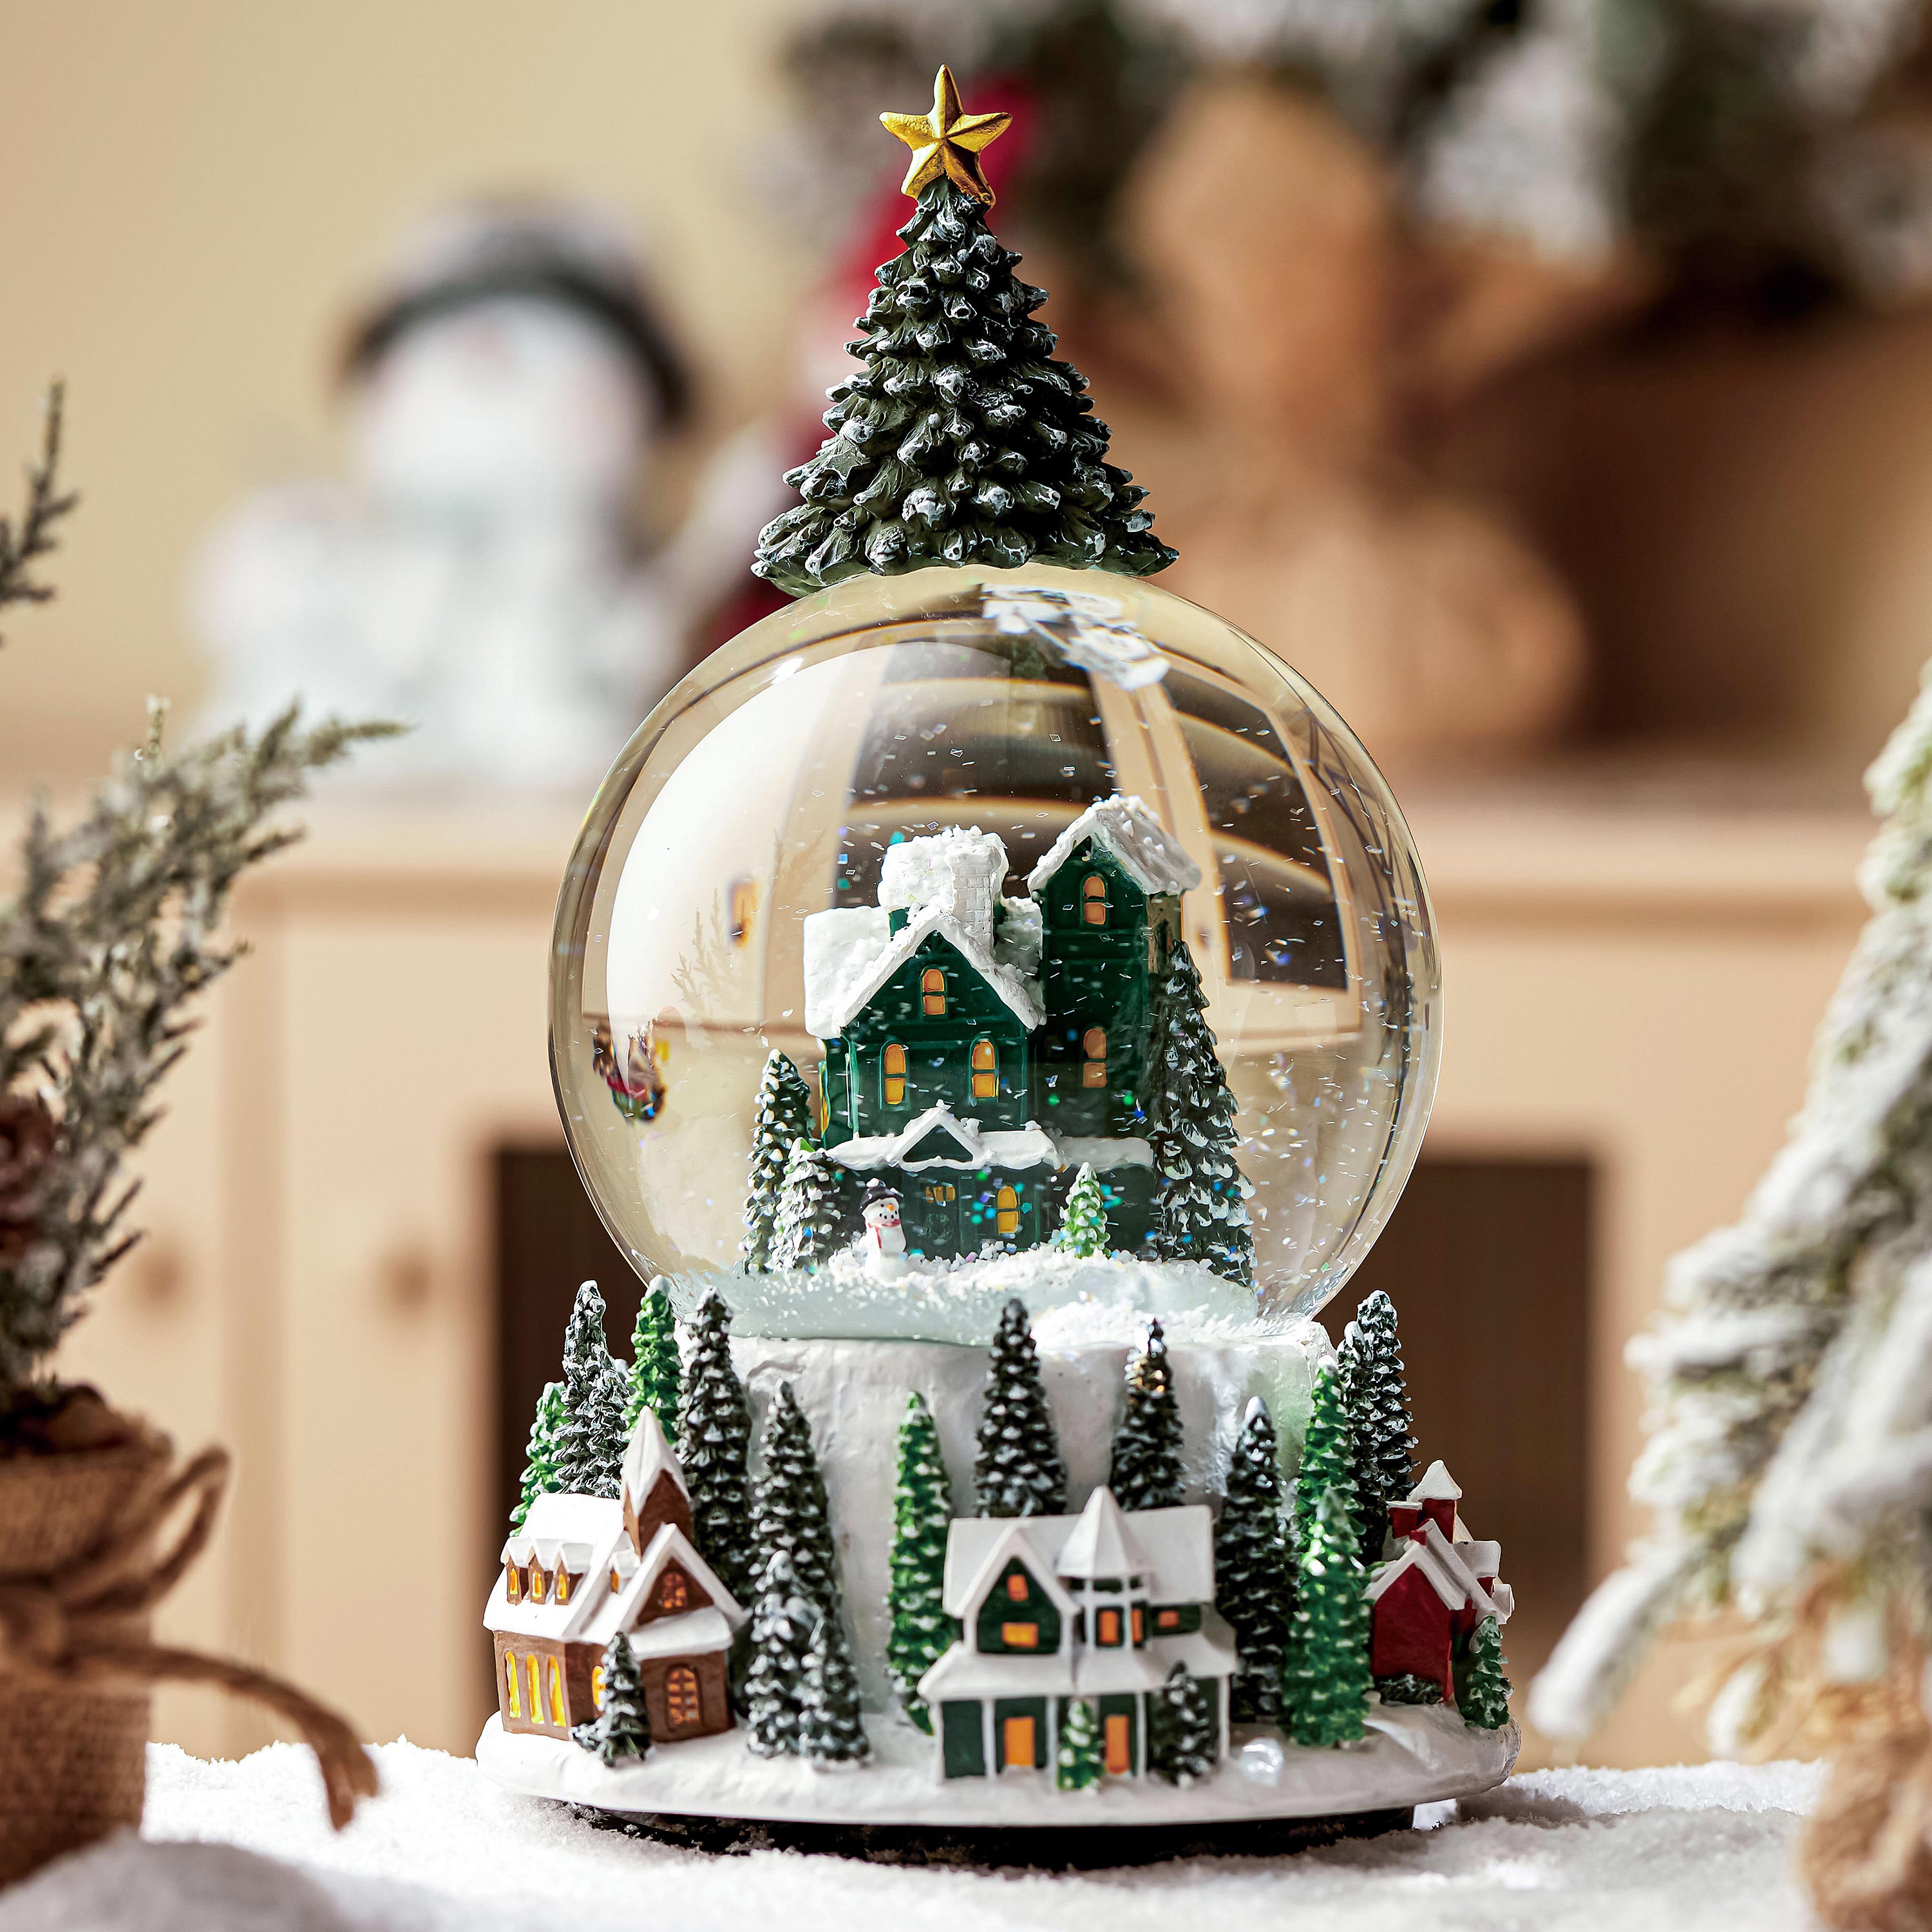 Village Lighting Christmas Ornament Storage Box w/ Adjustable